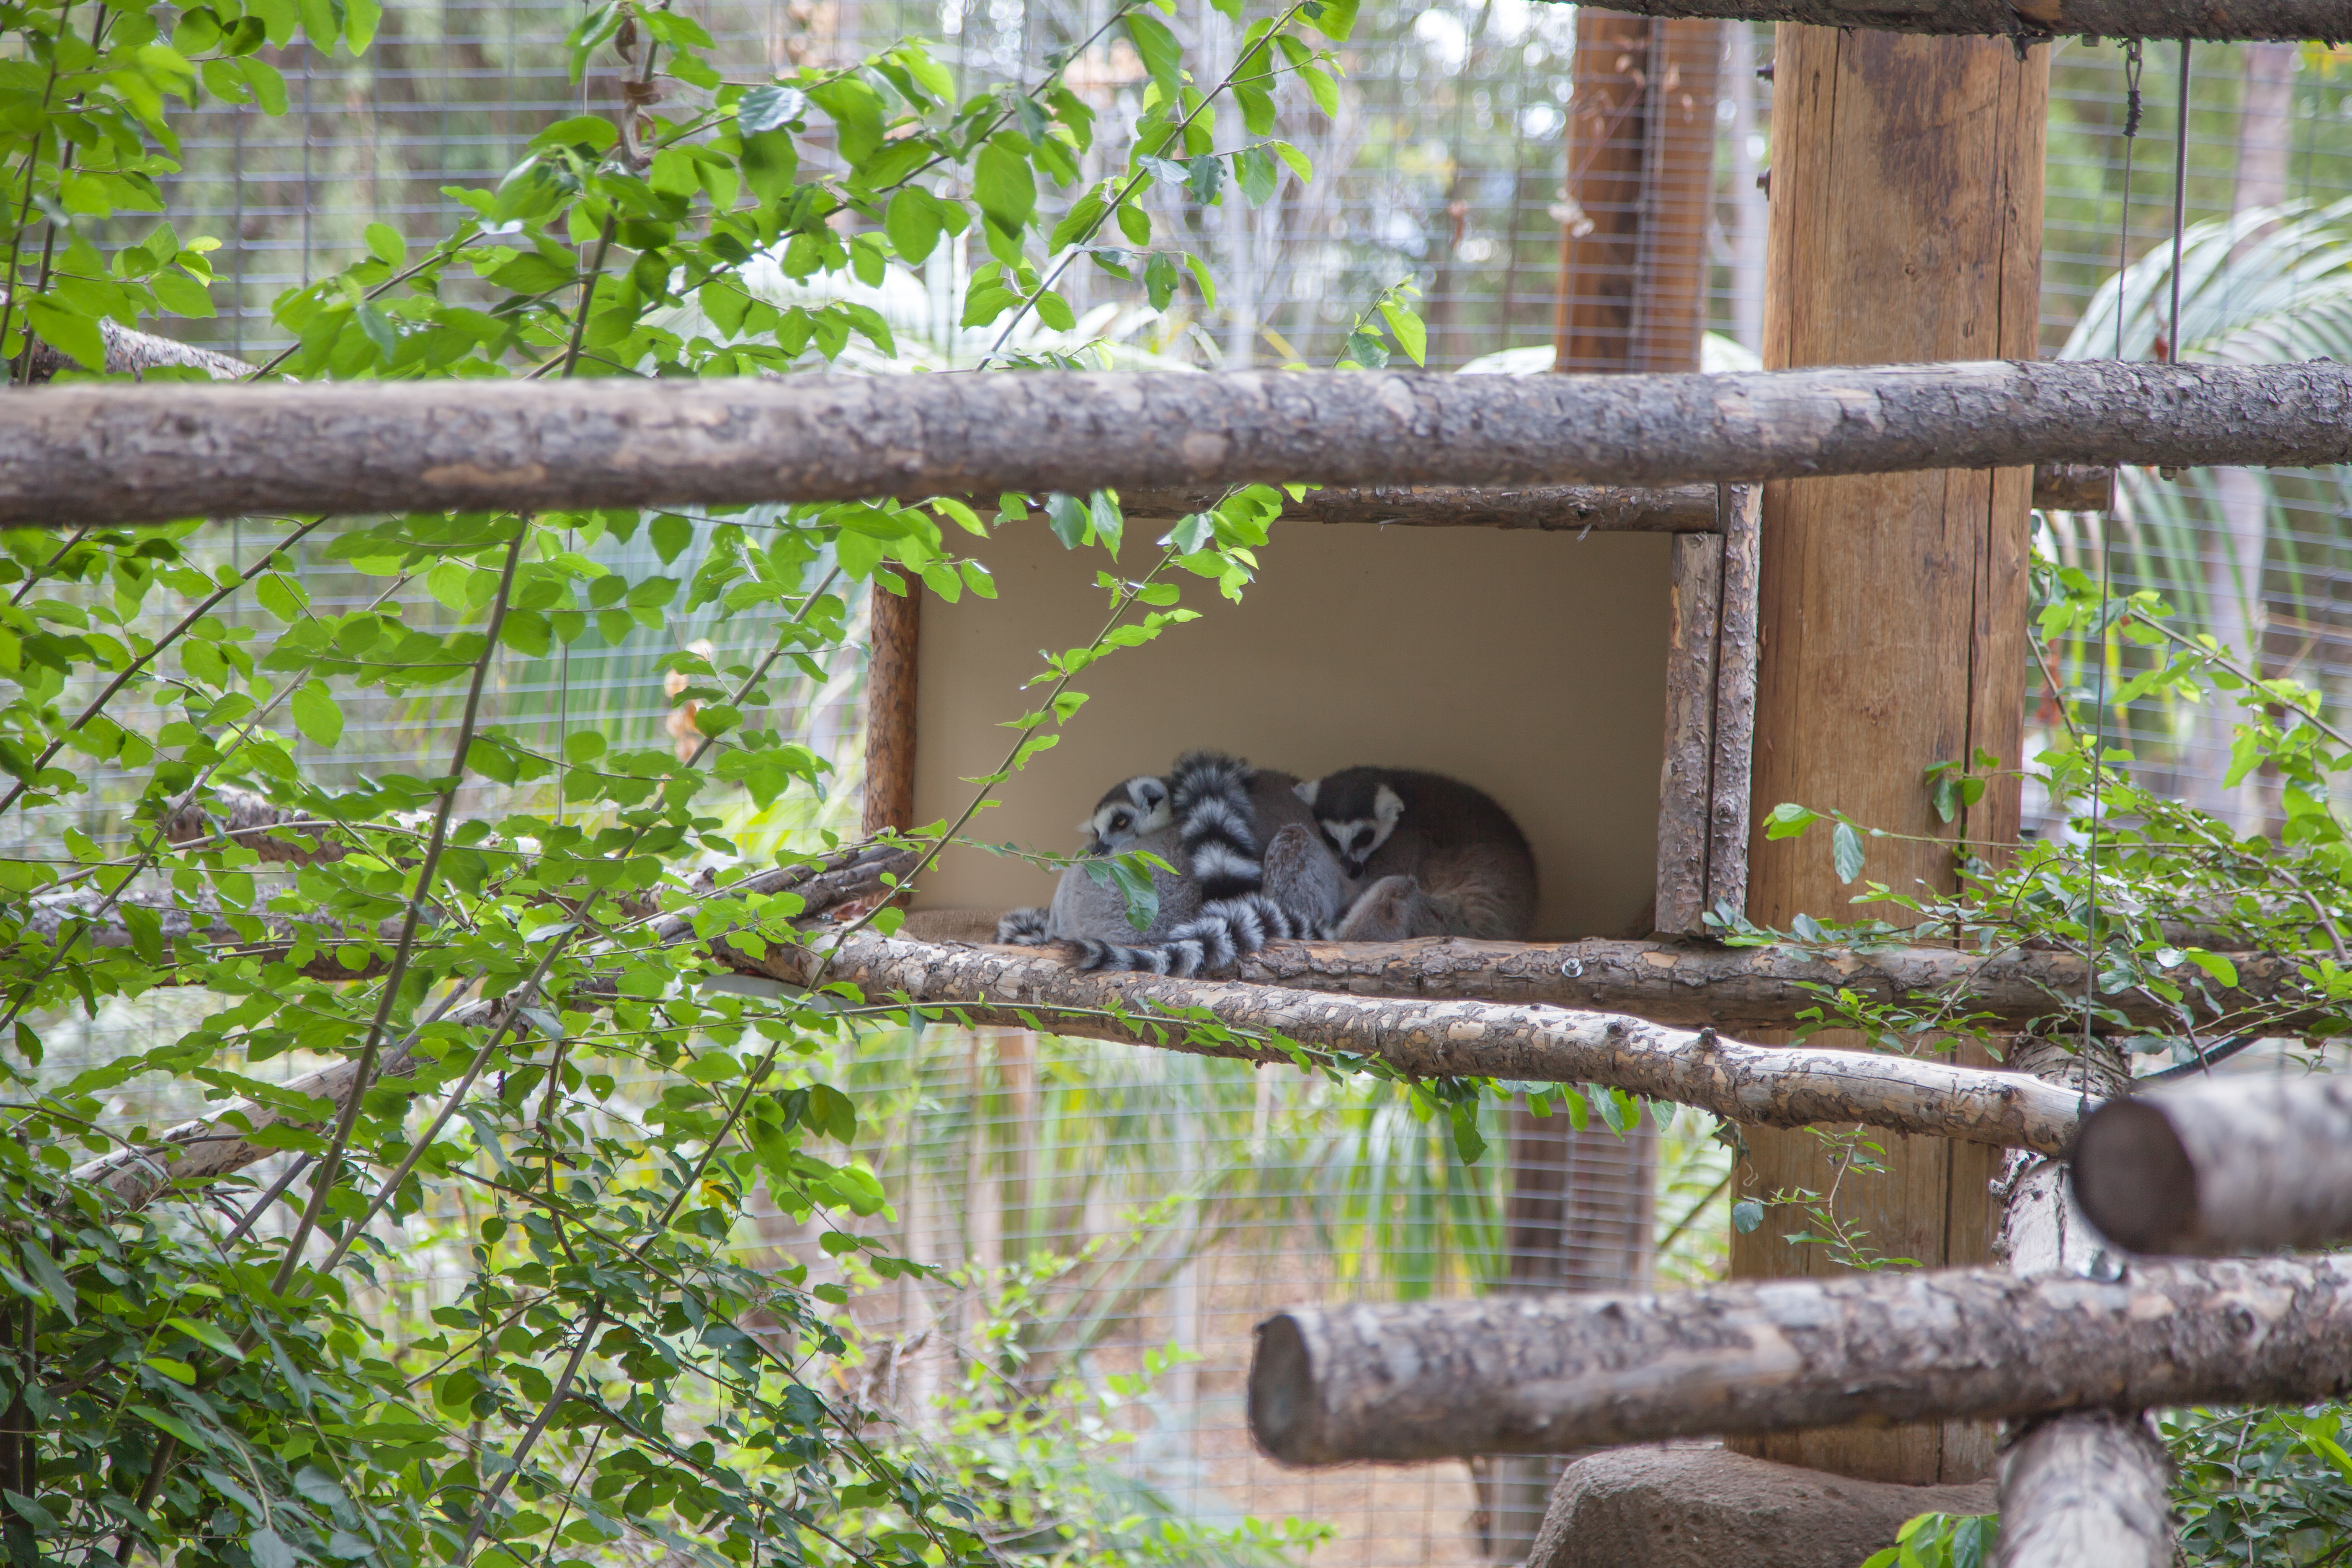 some lazy lemurs